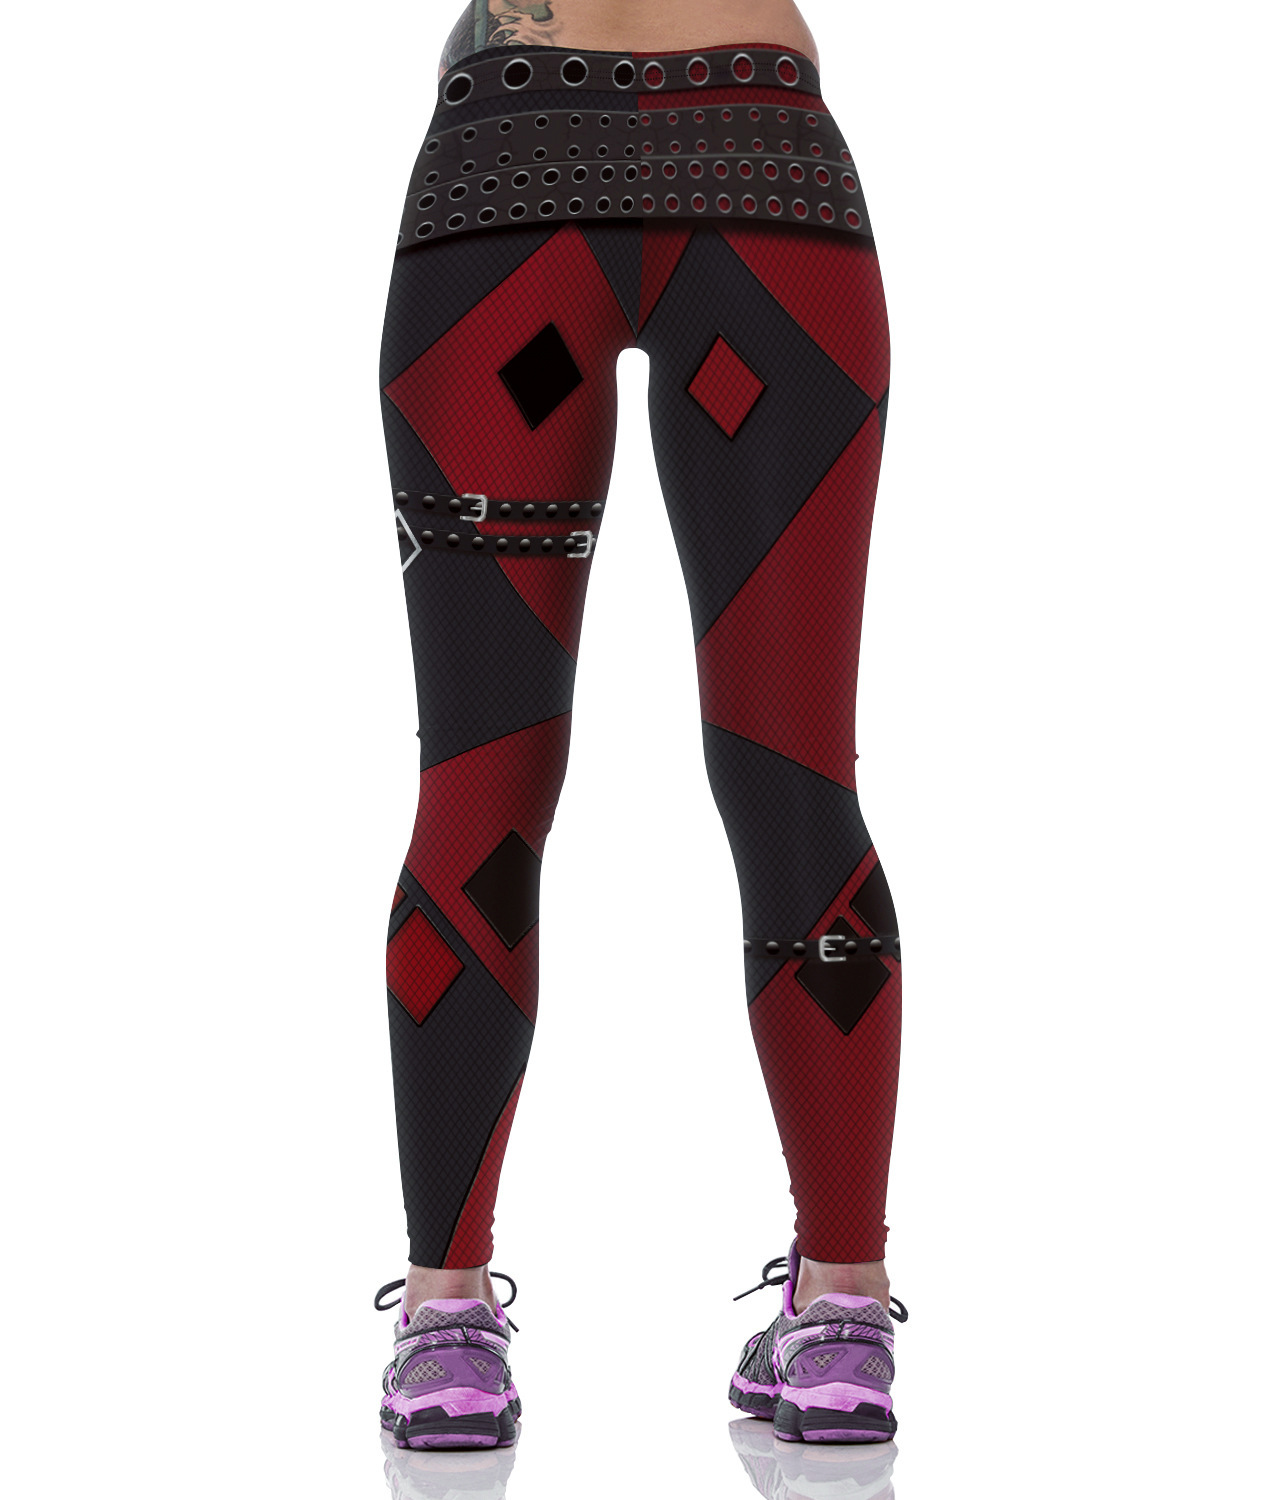 Harley Quinn Womans Plus Size Yoga Pants Galaxy Superhot Leggings Sexy Gym Wear Pants 